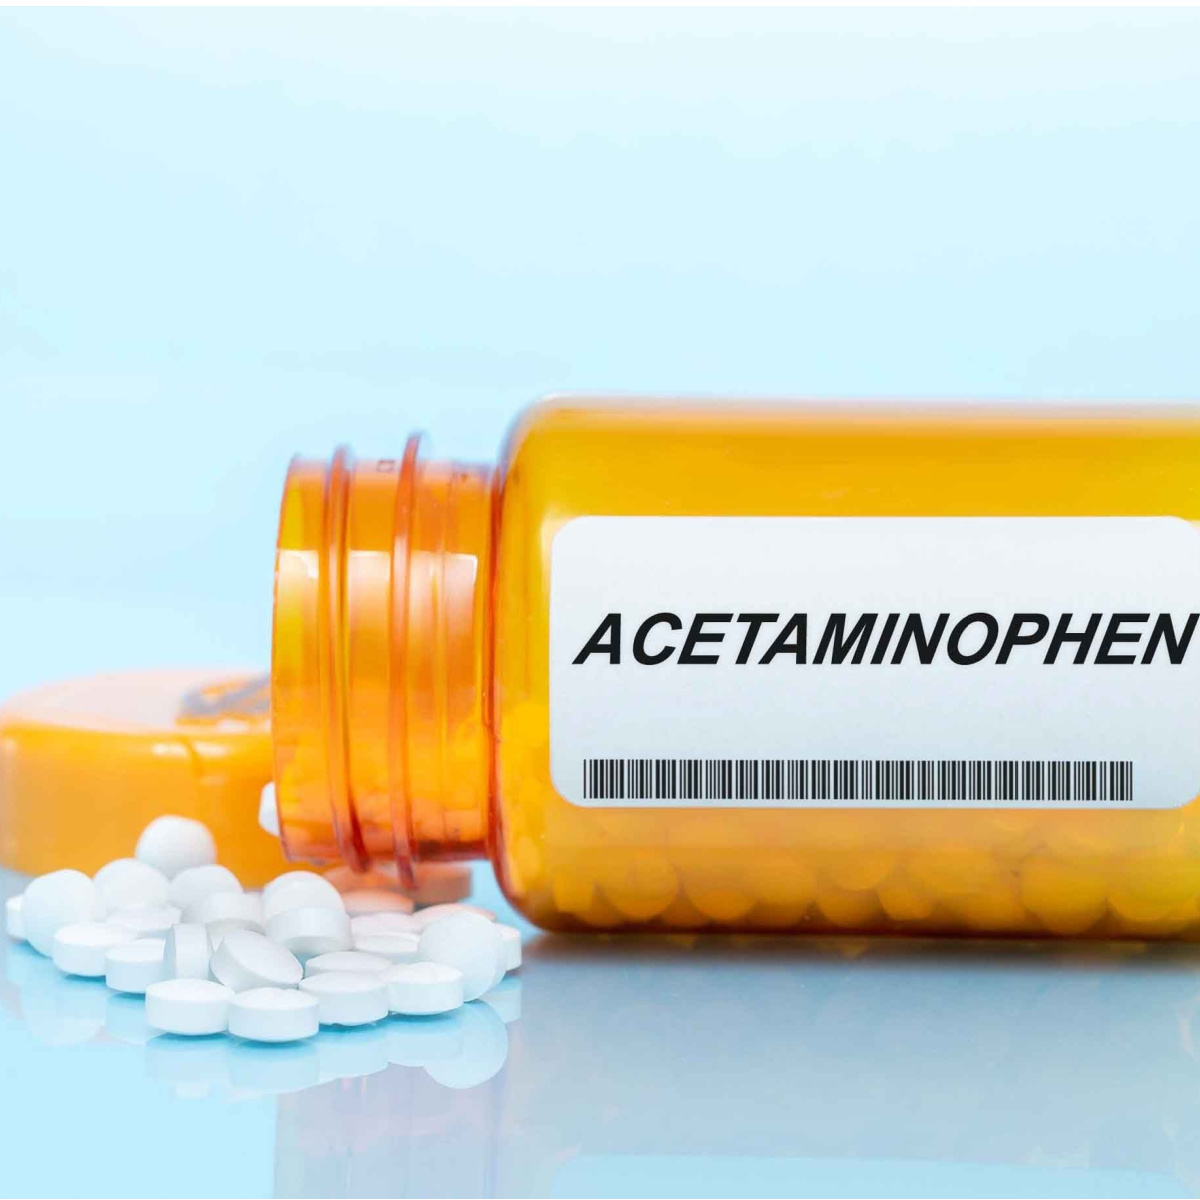 acetaminophen bottle